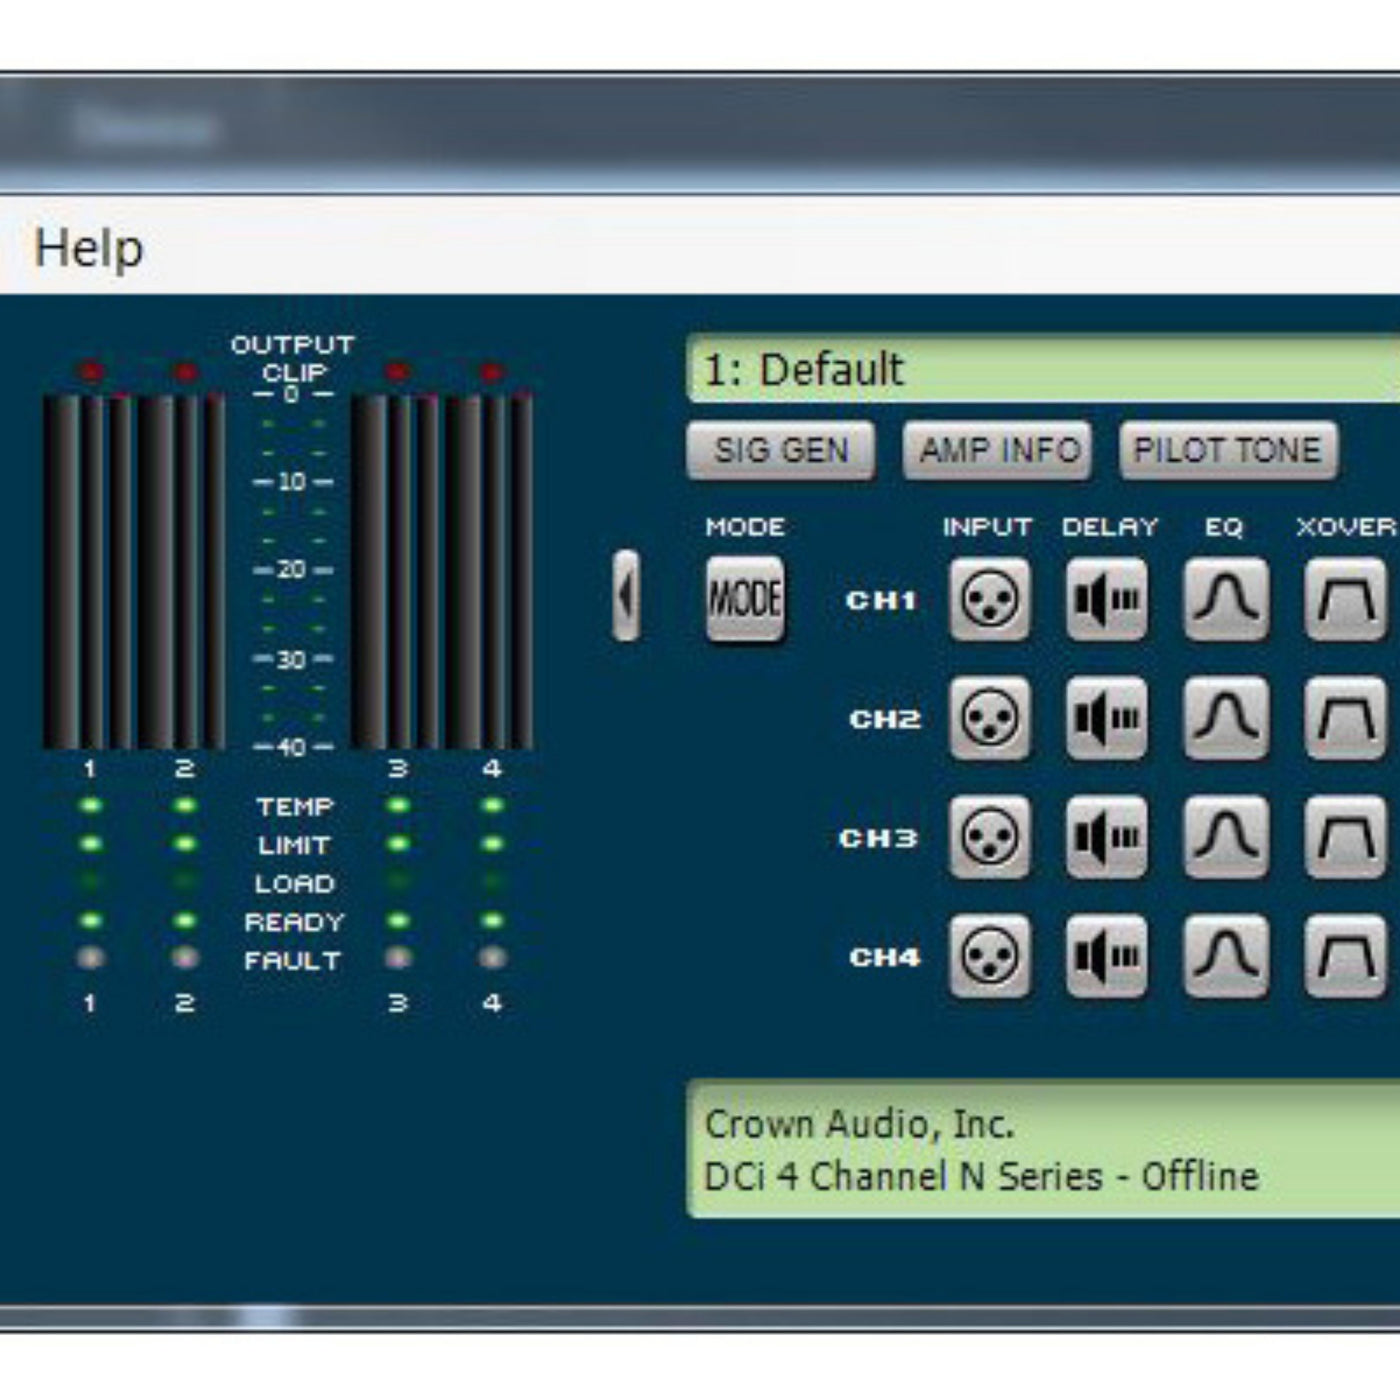 JBL Professional Introduces FIR Tunings for AE Series Loudspeakers